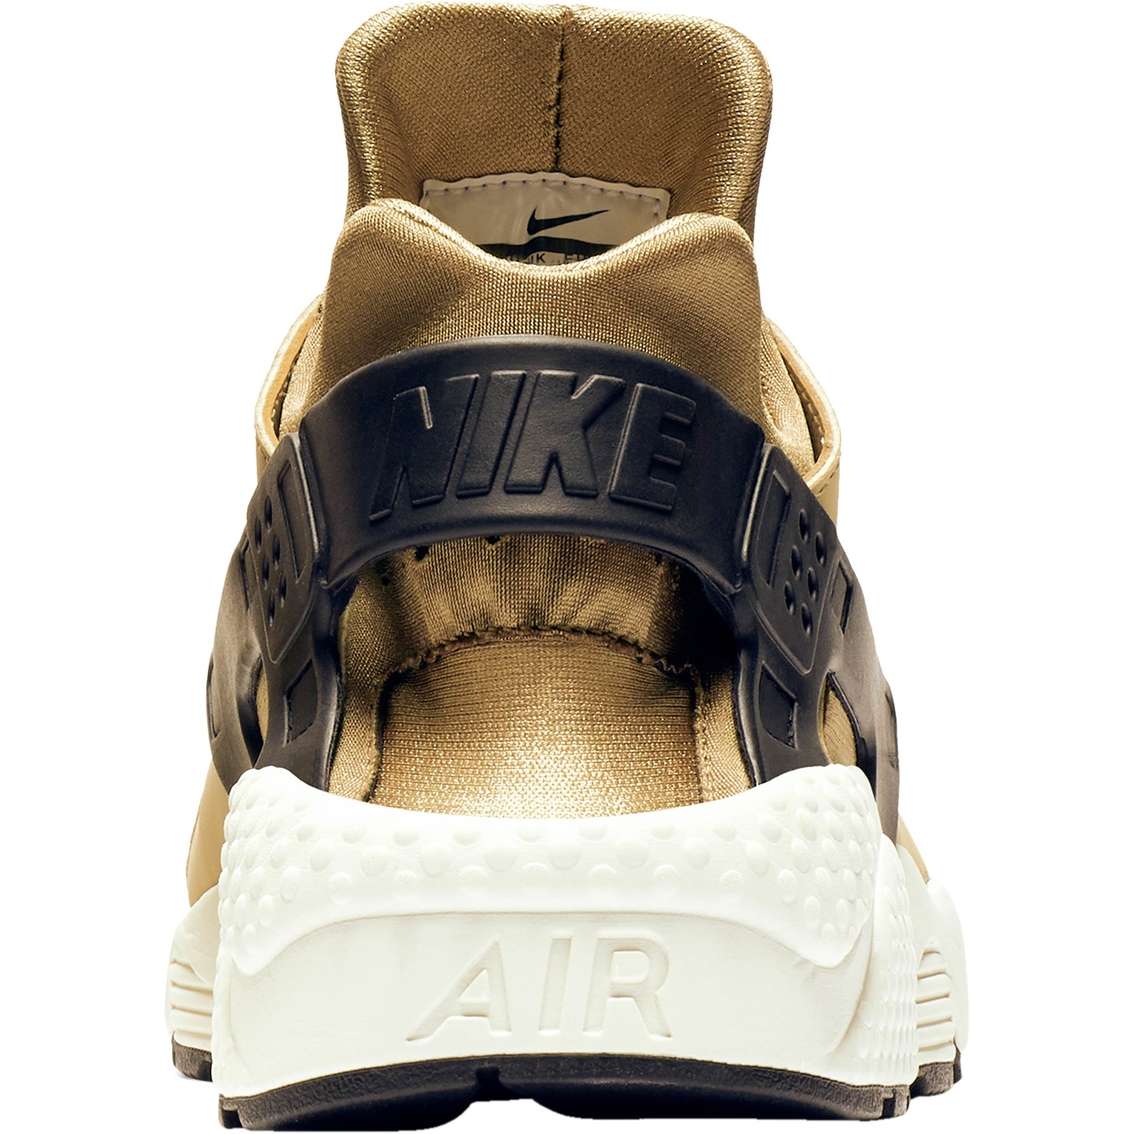 Nike Men's Air Huarache Shoes - Image 6 of 6